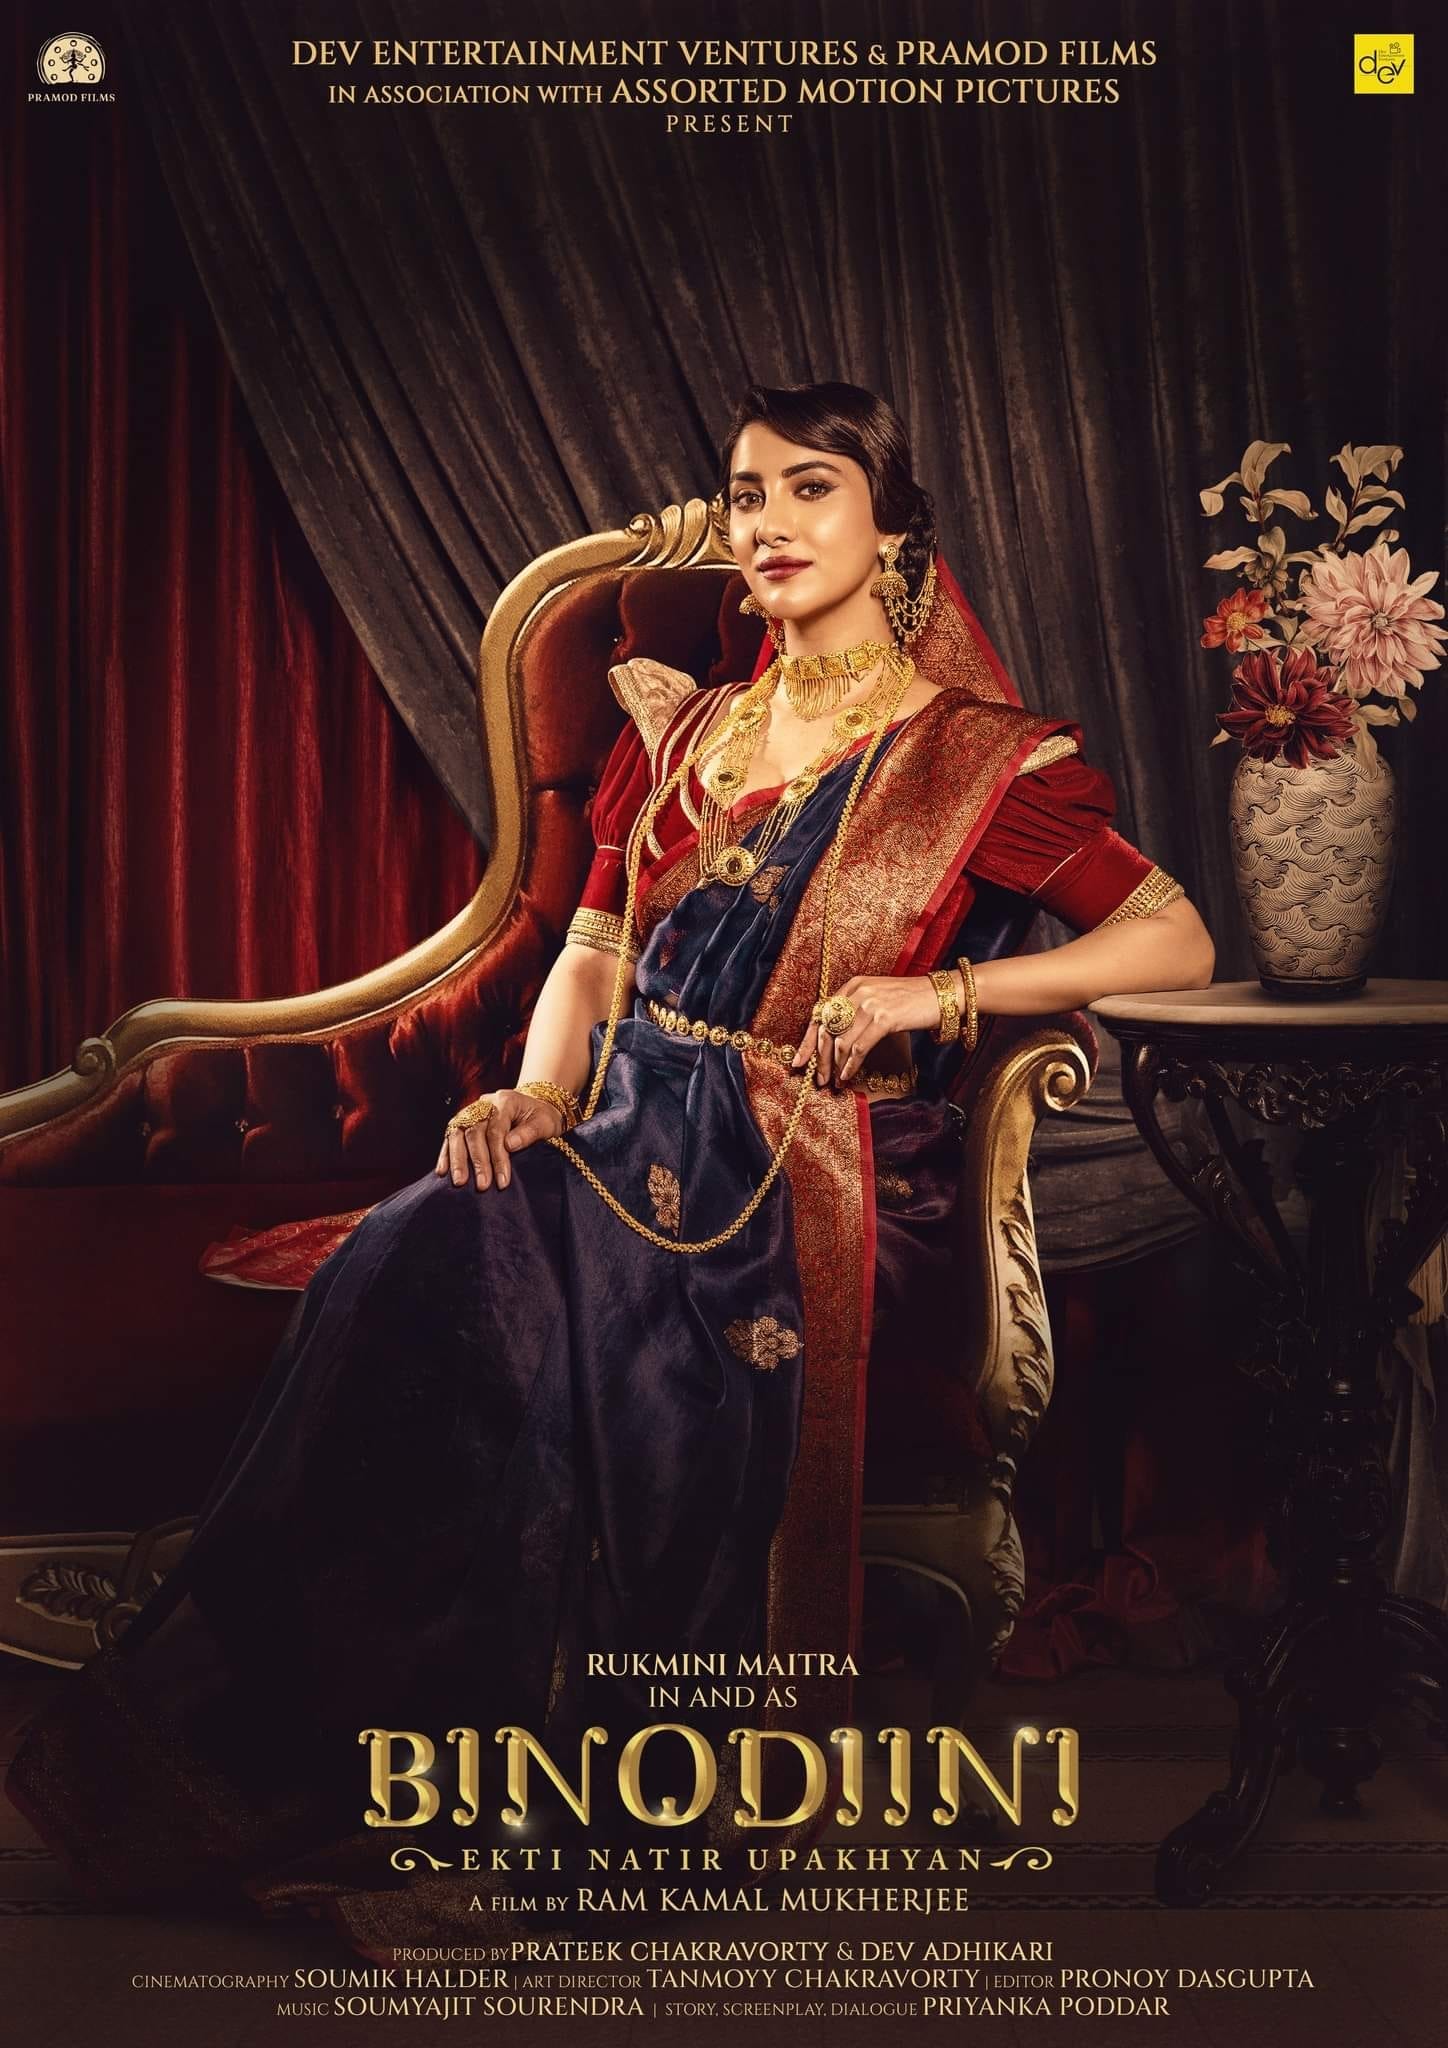 Poster for the movie "Binodiini"